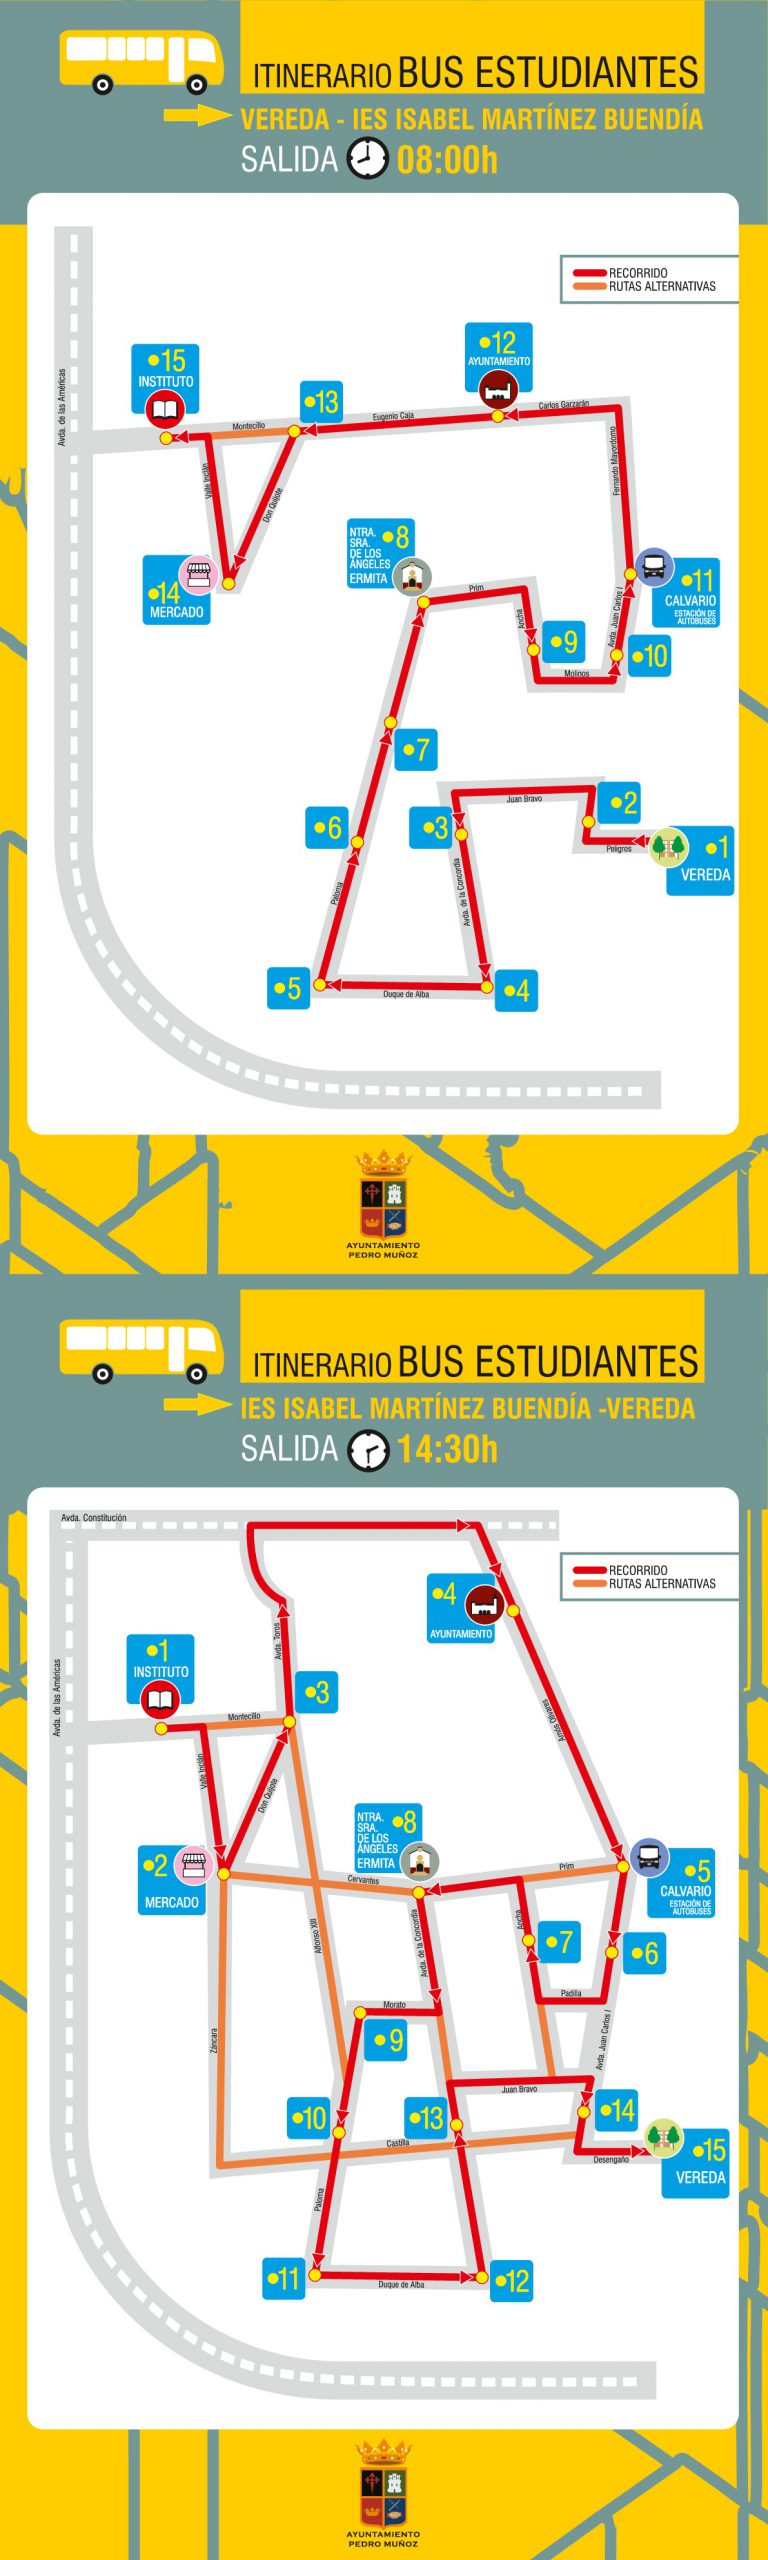 Infografia-autobus-urbano-002.jpg